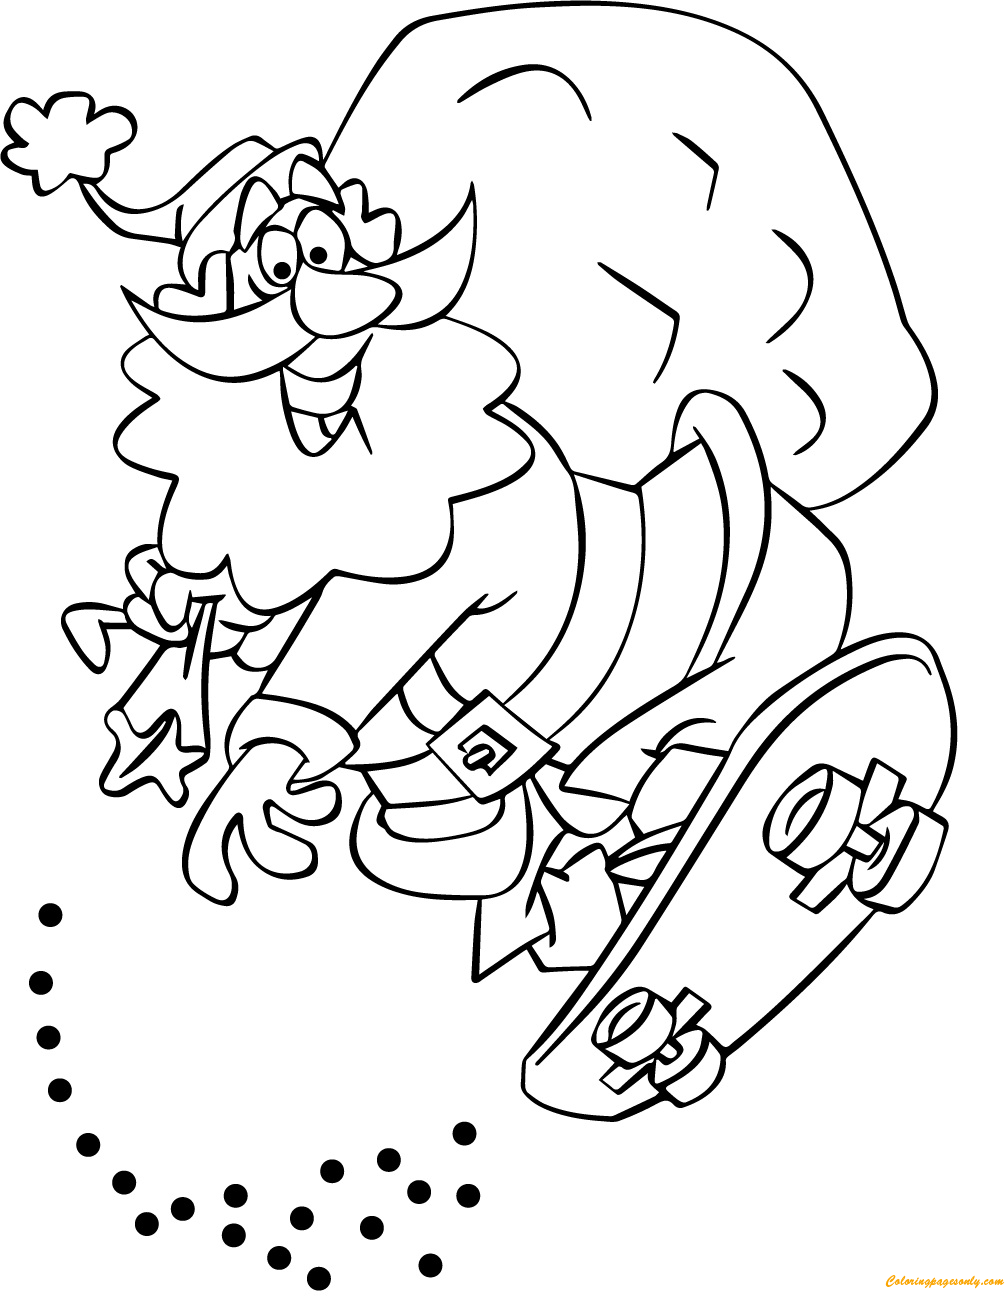 Santa Claus Skateboarding from Santa Claus